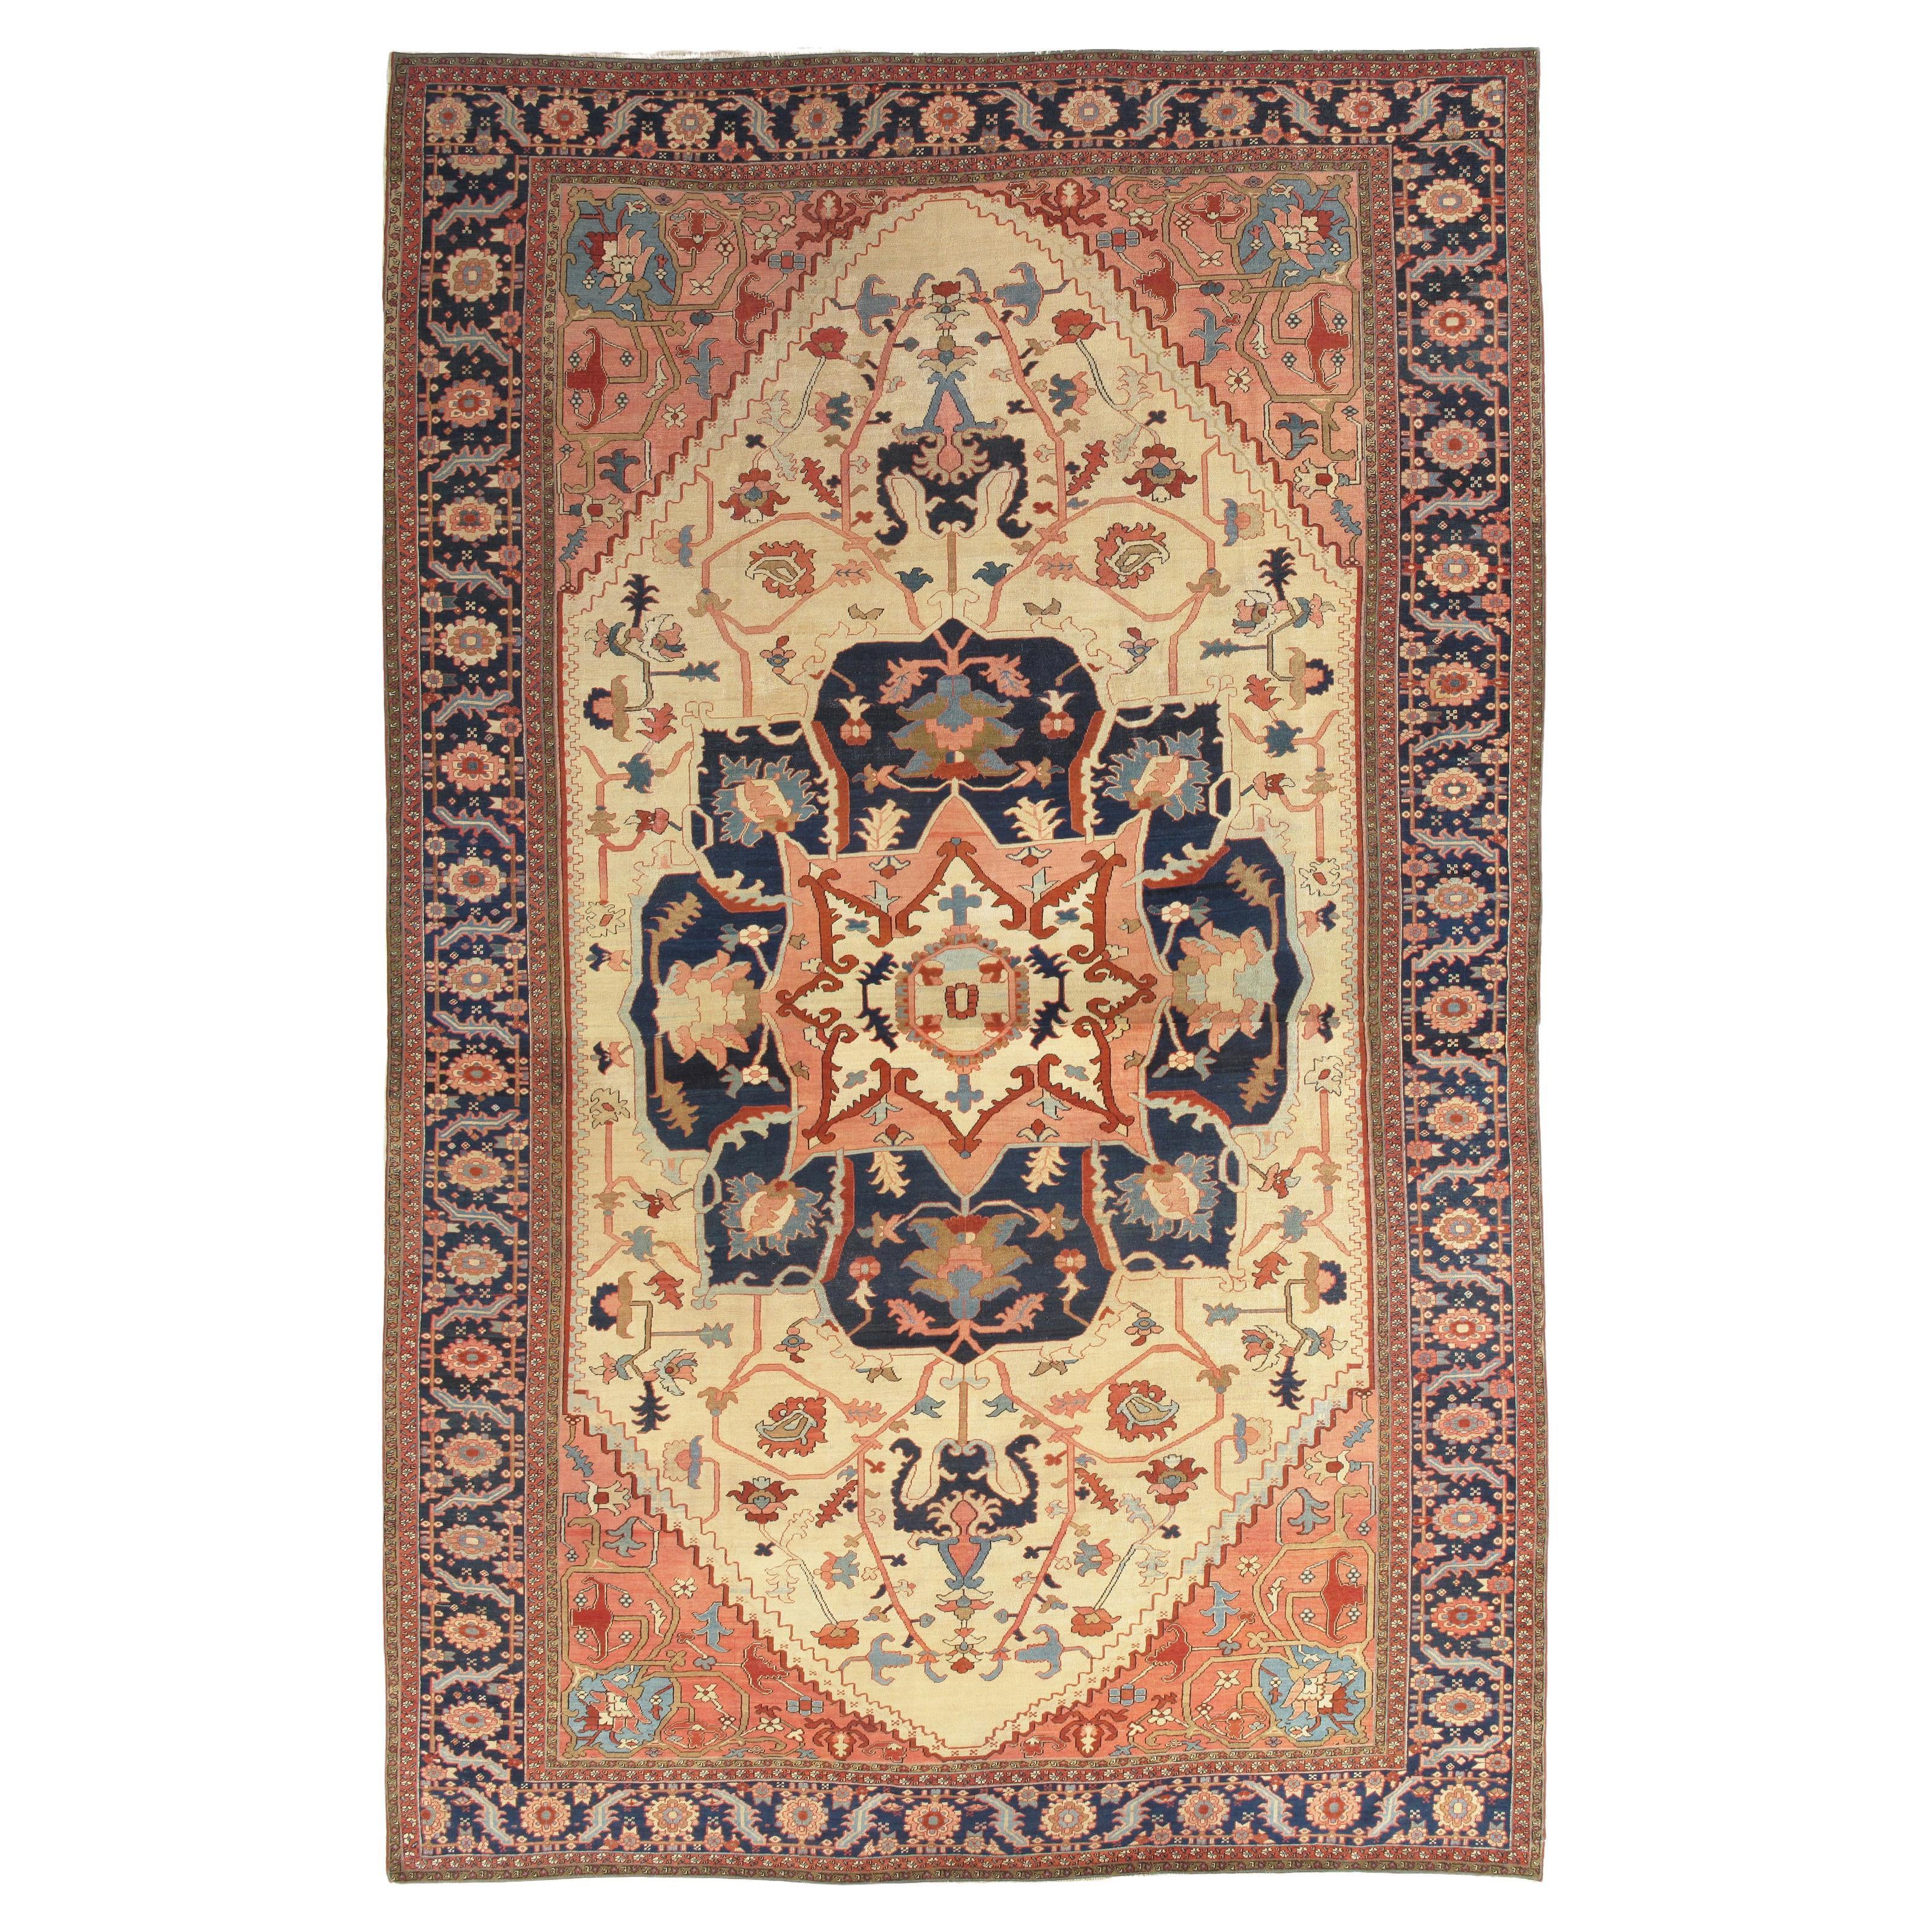 Antique Persian Serapi Carpet, Handmade Wool Oriental Rug, Ivory and Light Blue